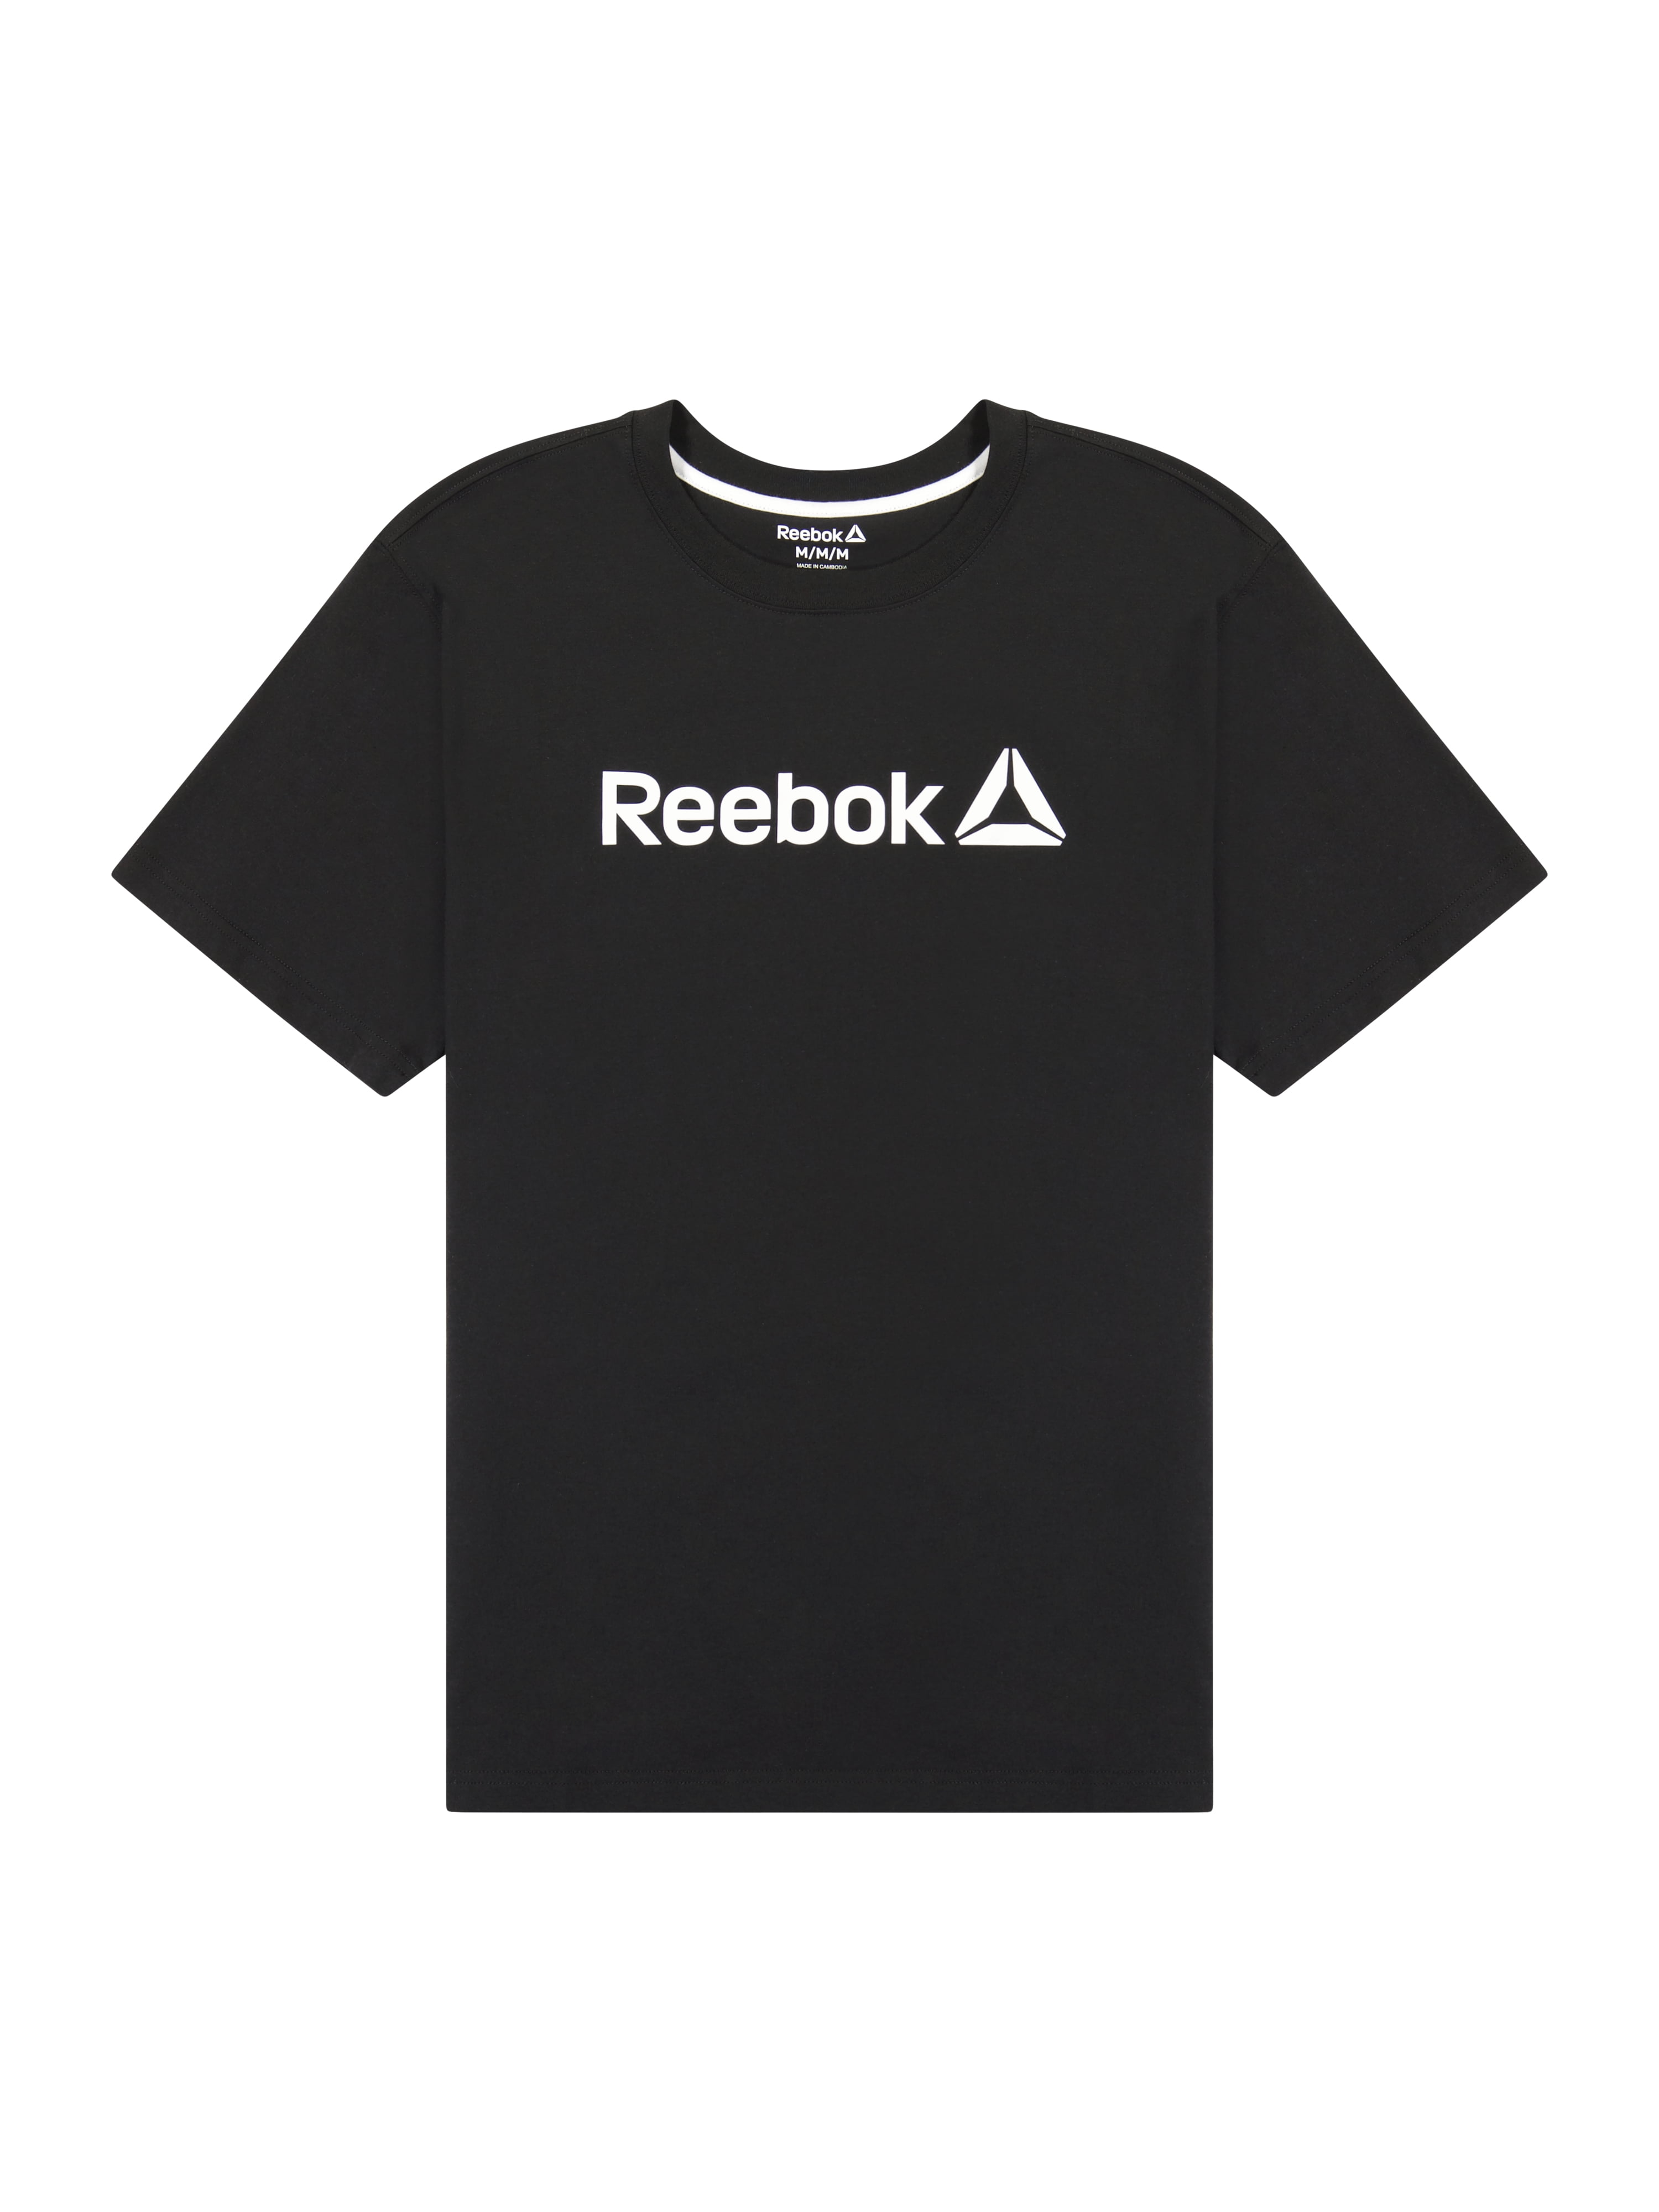 Reebok Men's T-Shirt - Multi - M